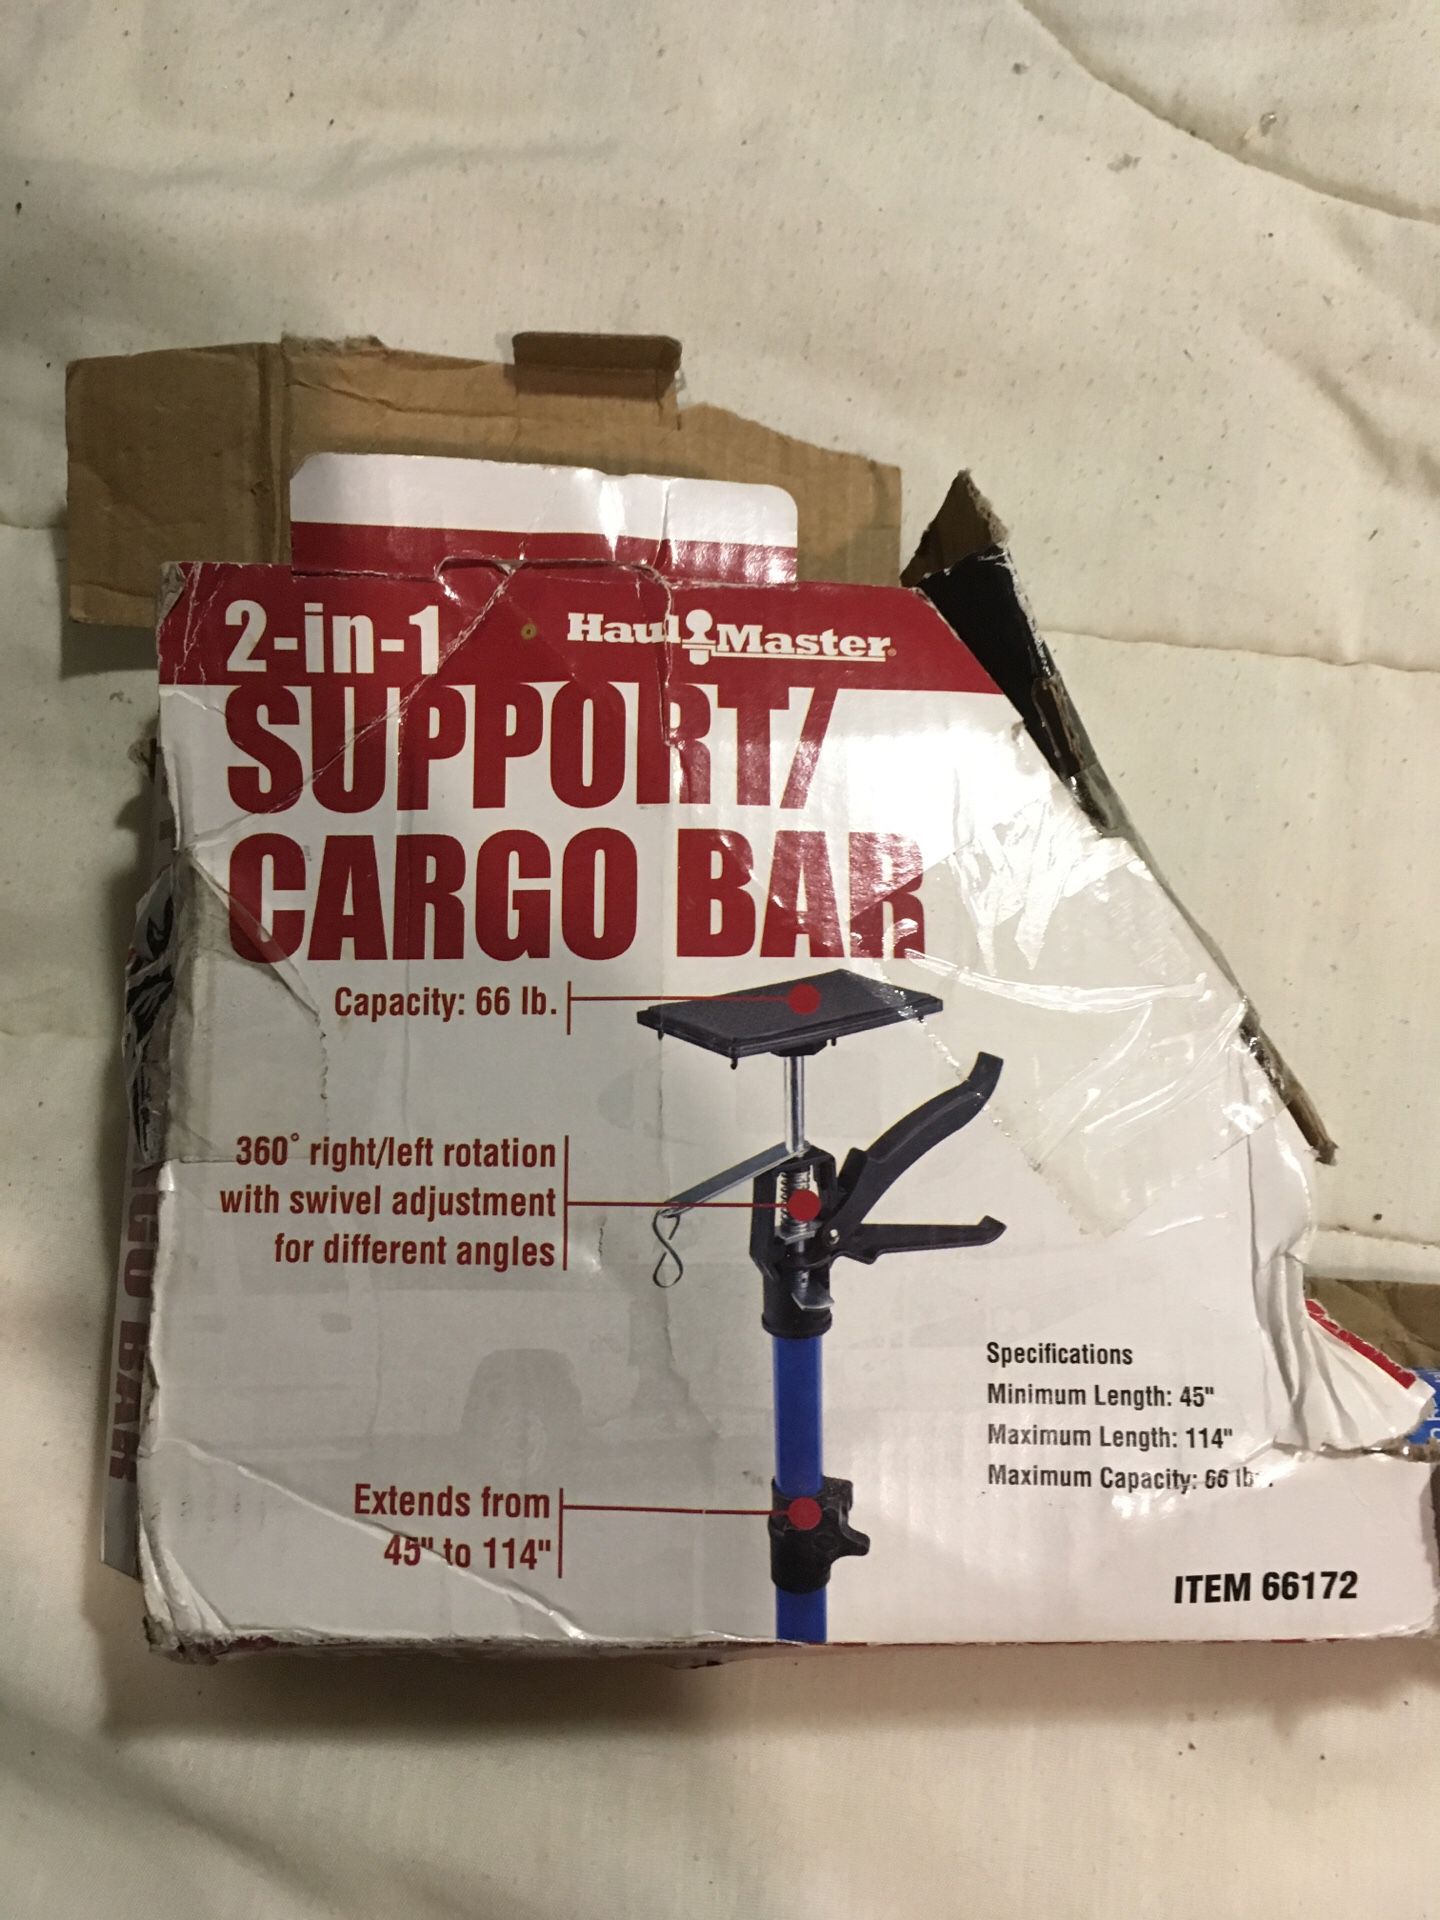 Haul Master 2-in-1 Support Cargo Bar